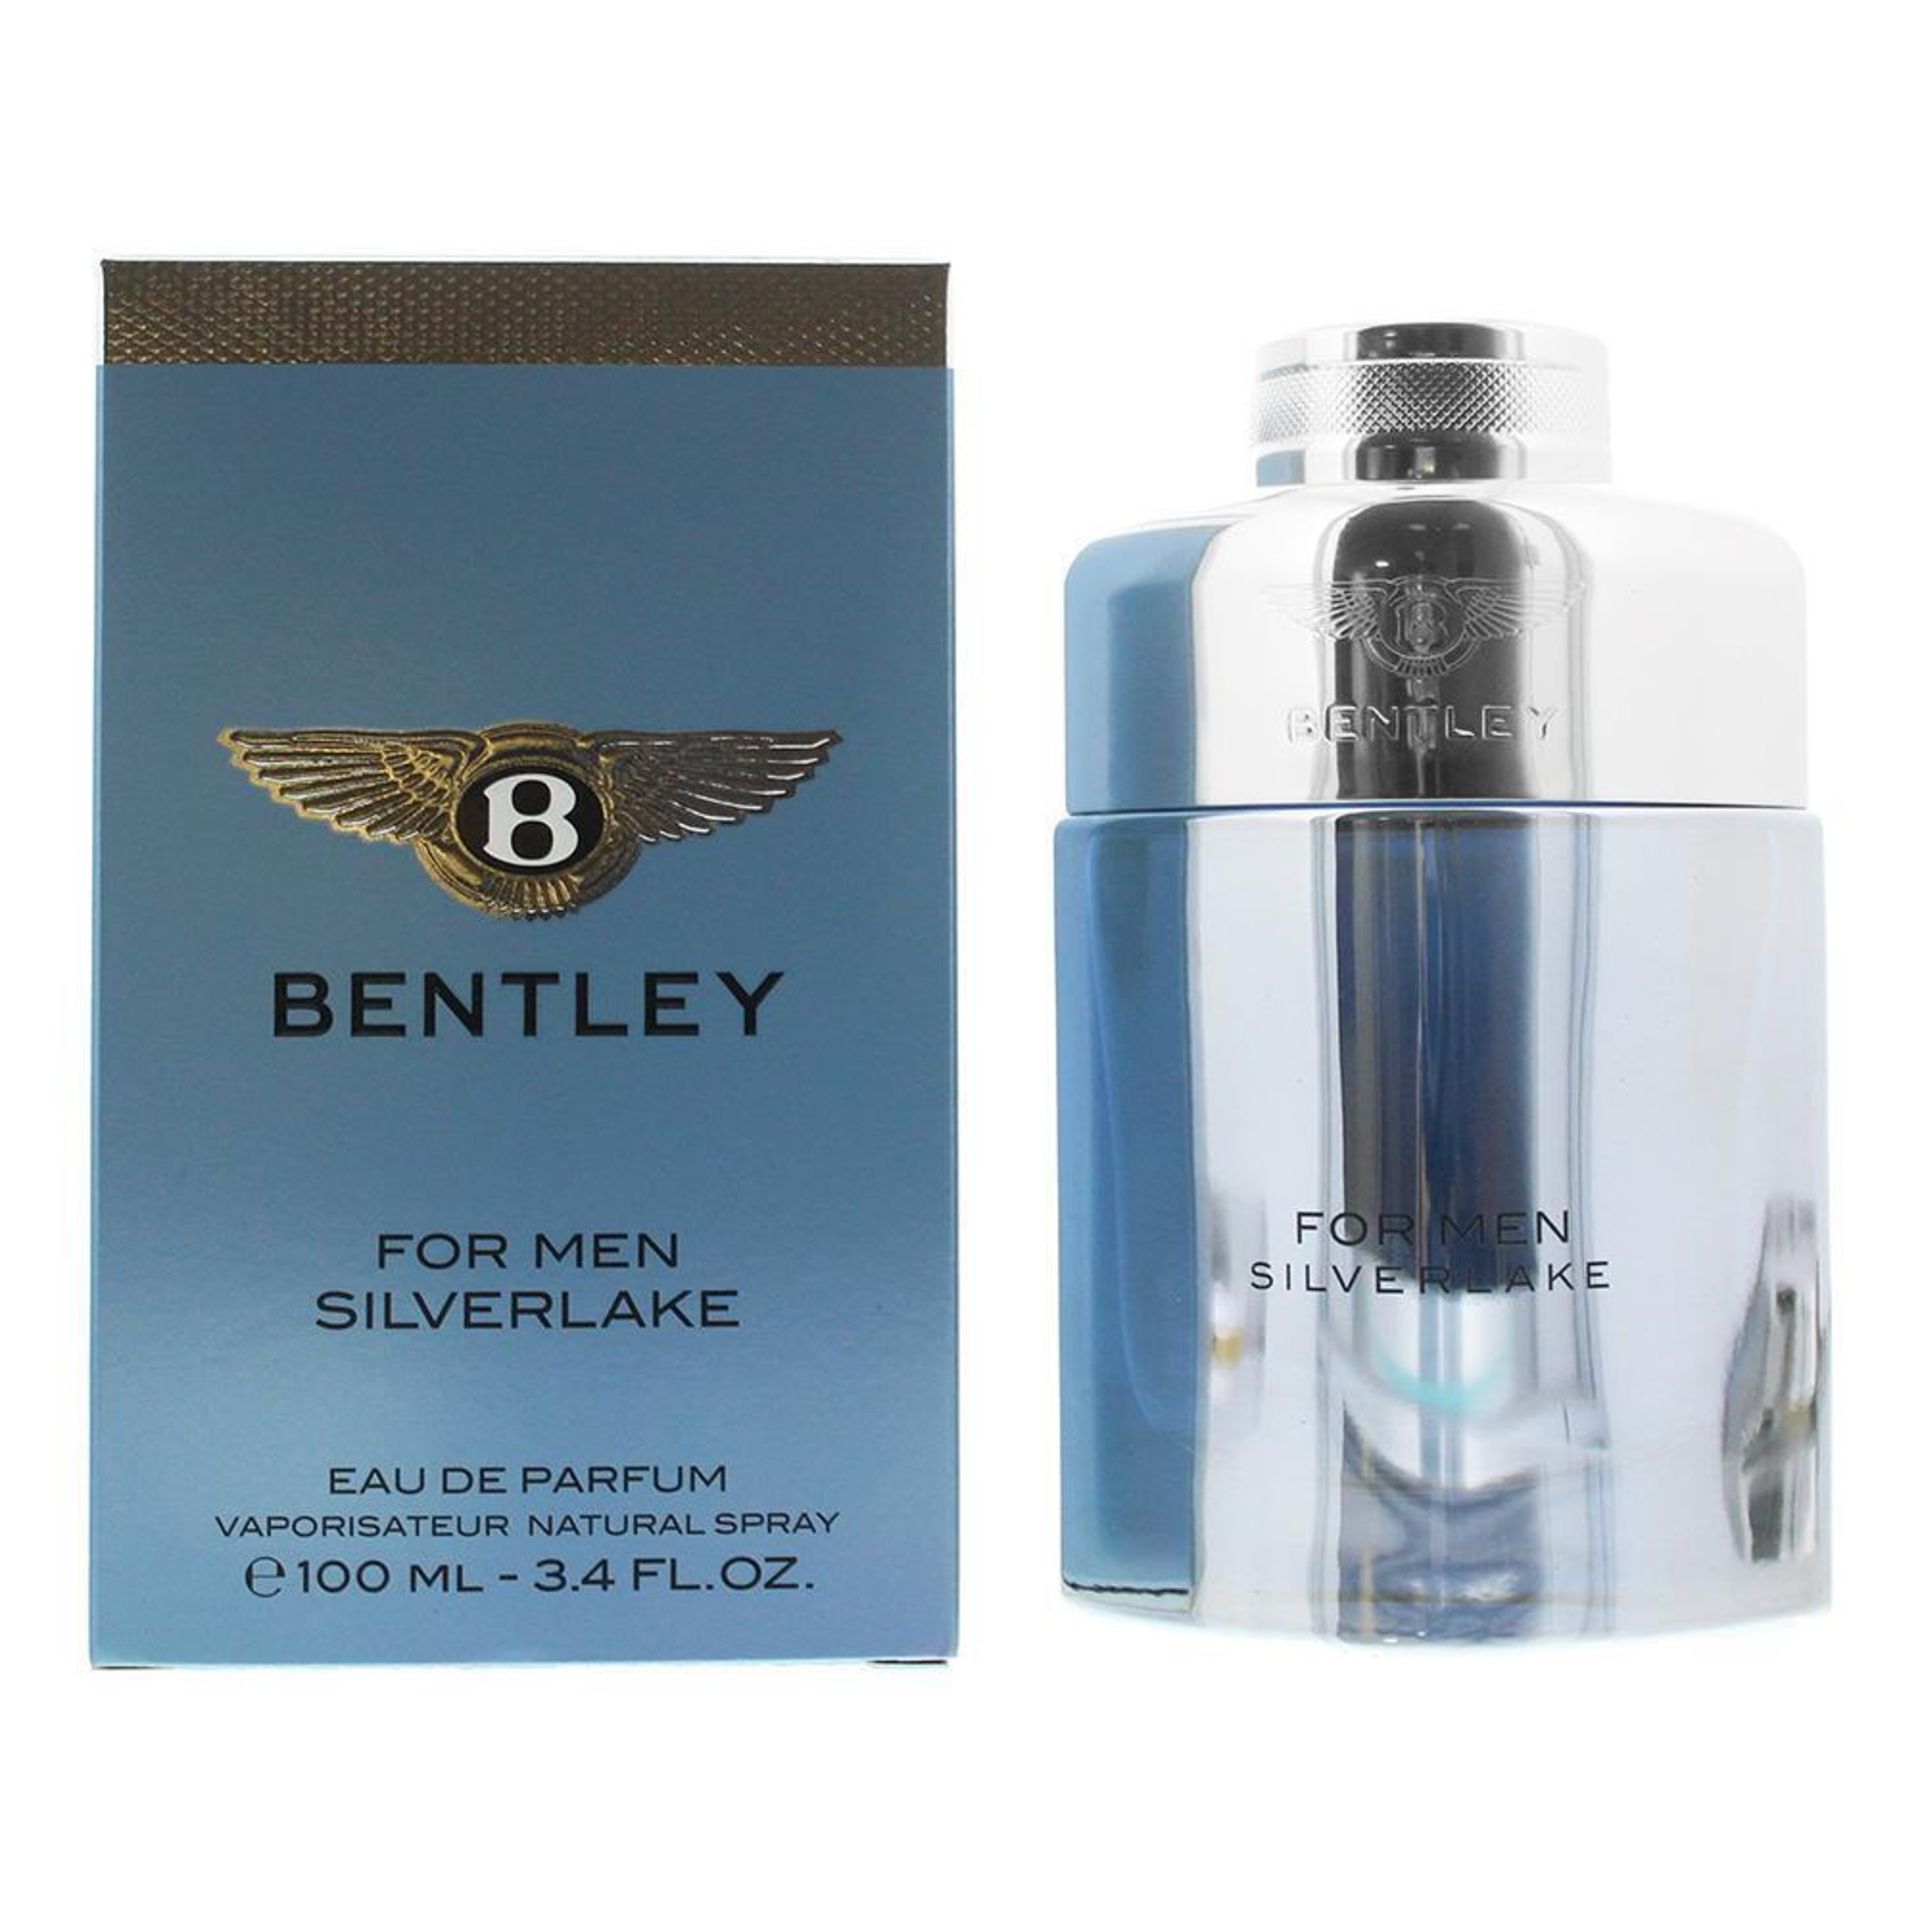 Bentley For Men Silverlake Eau de Parfum 100ml Spray - Image 2 of 6